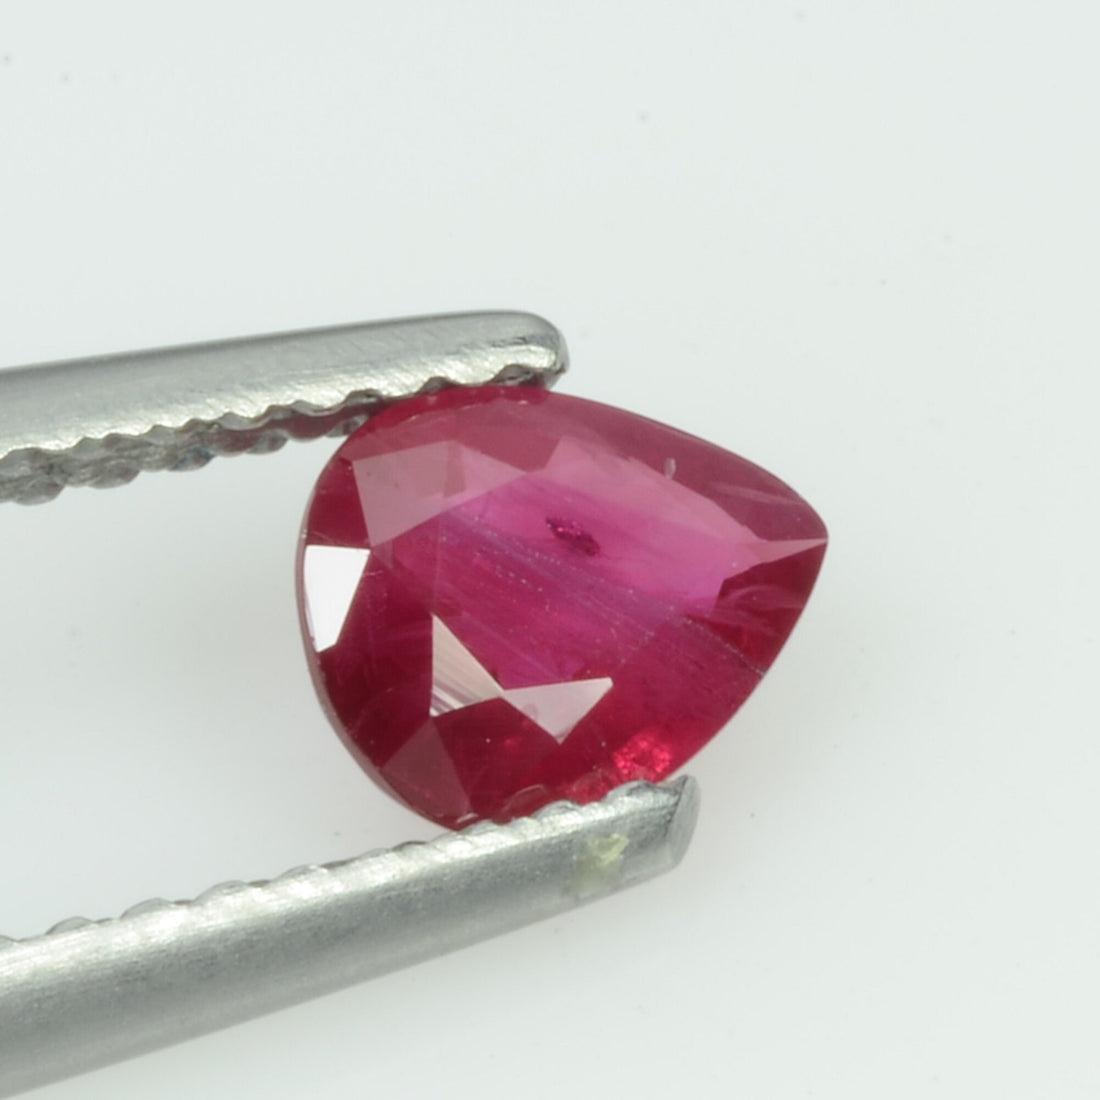 0.59 Cts Natural Burma Ruby Loose Gemstone Pear Cut